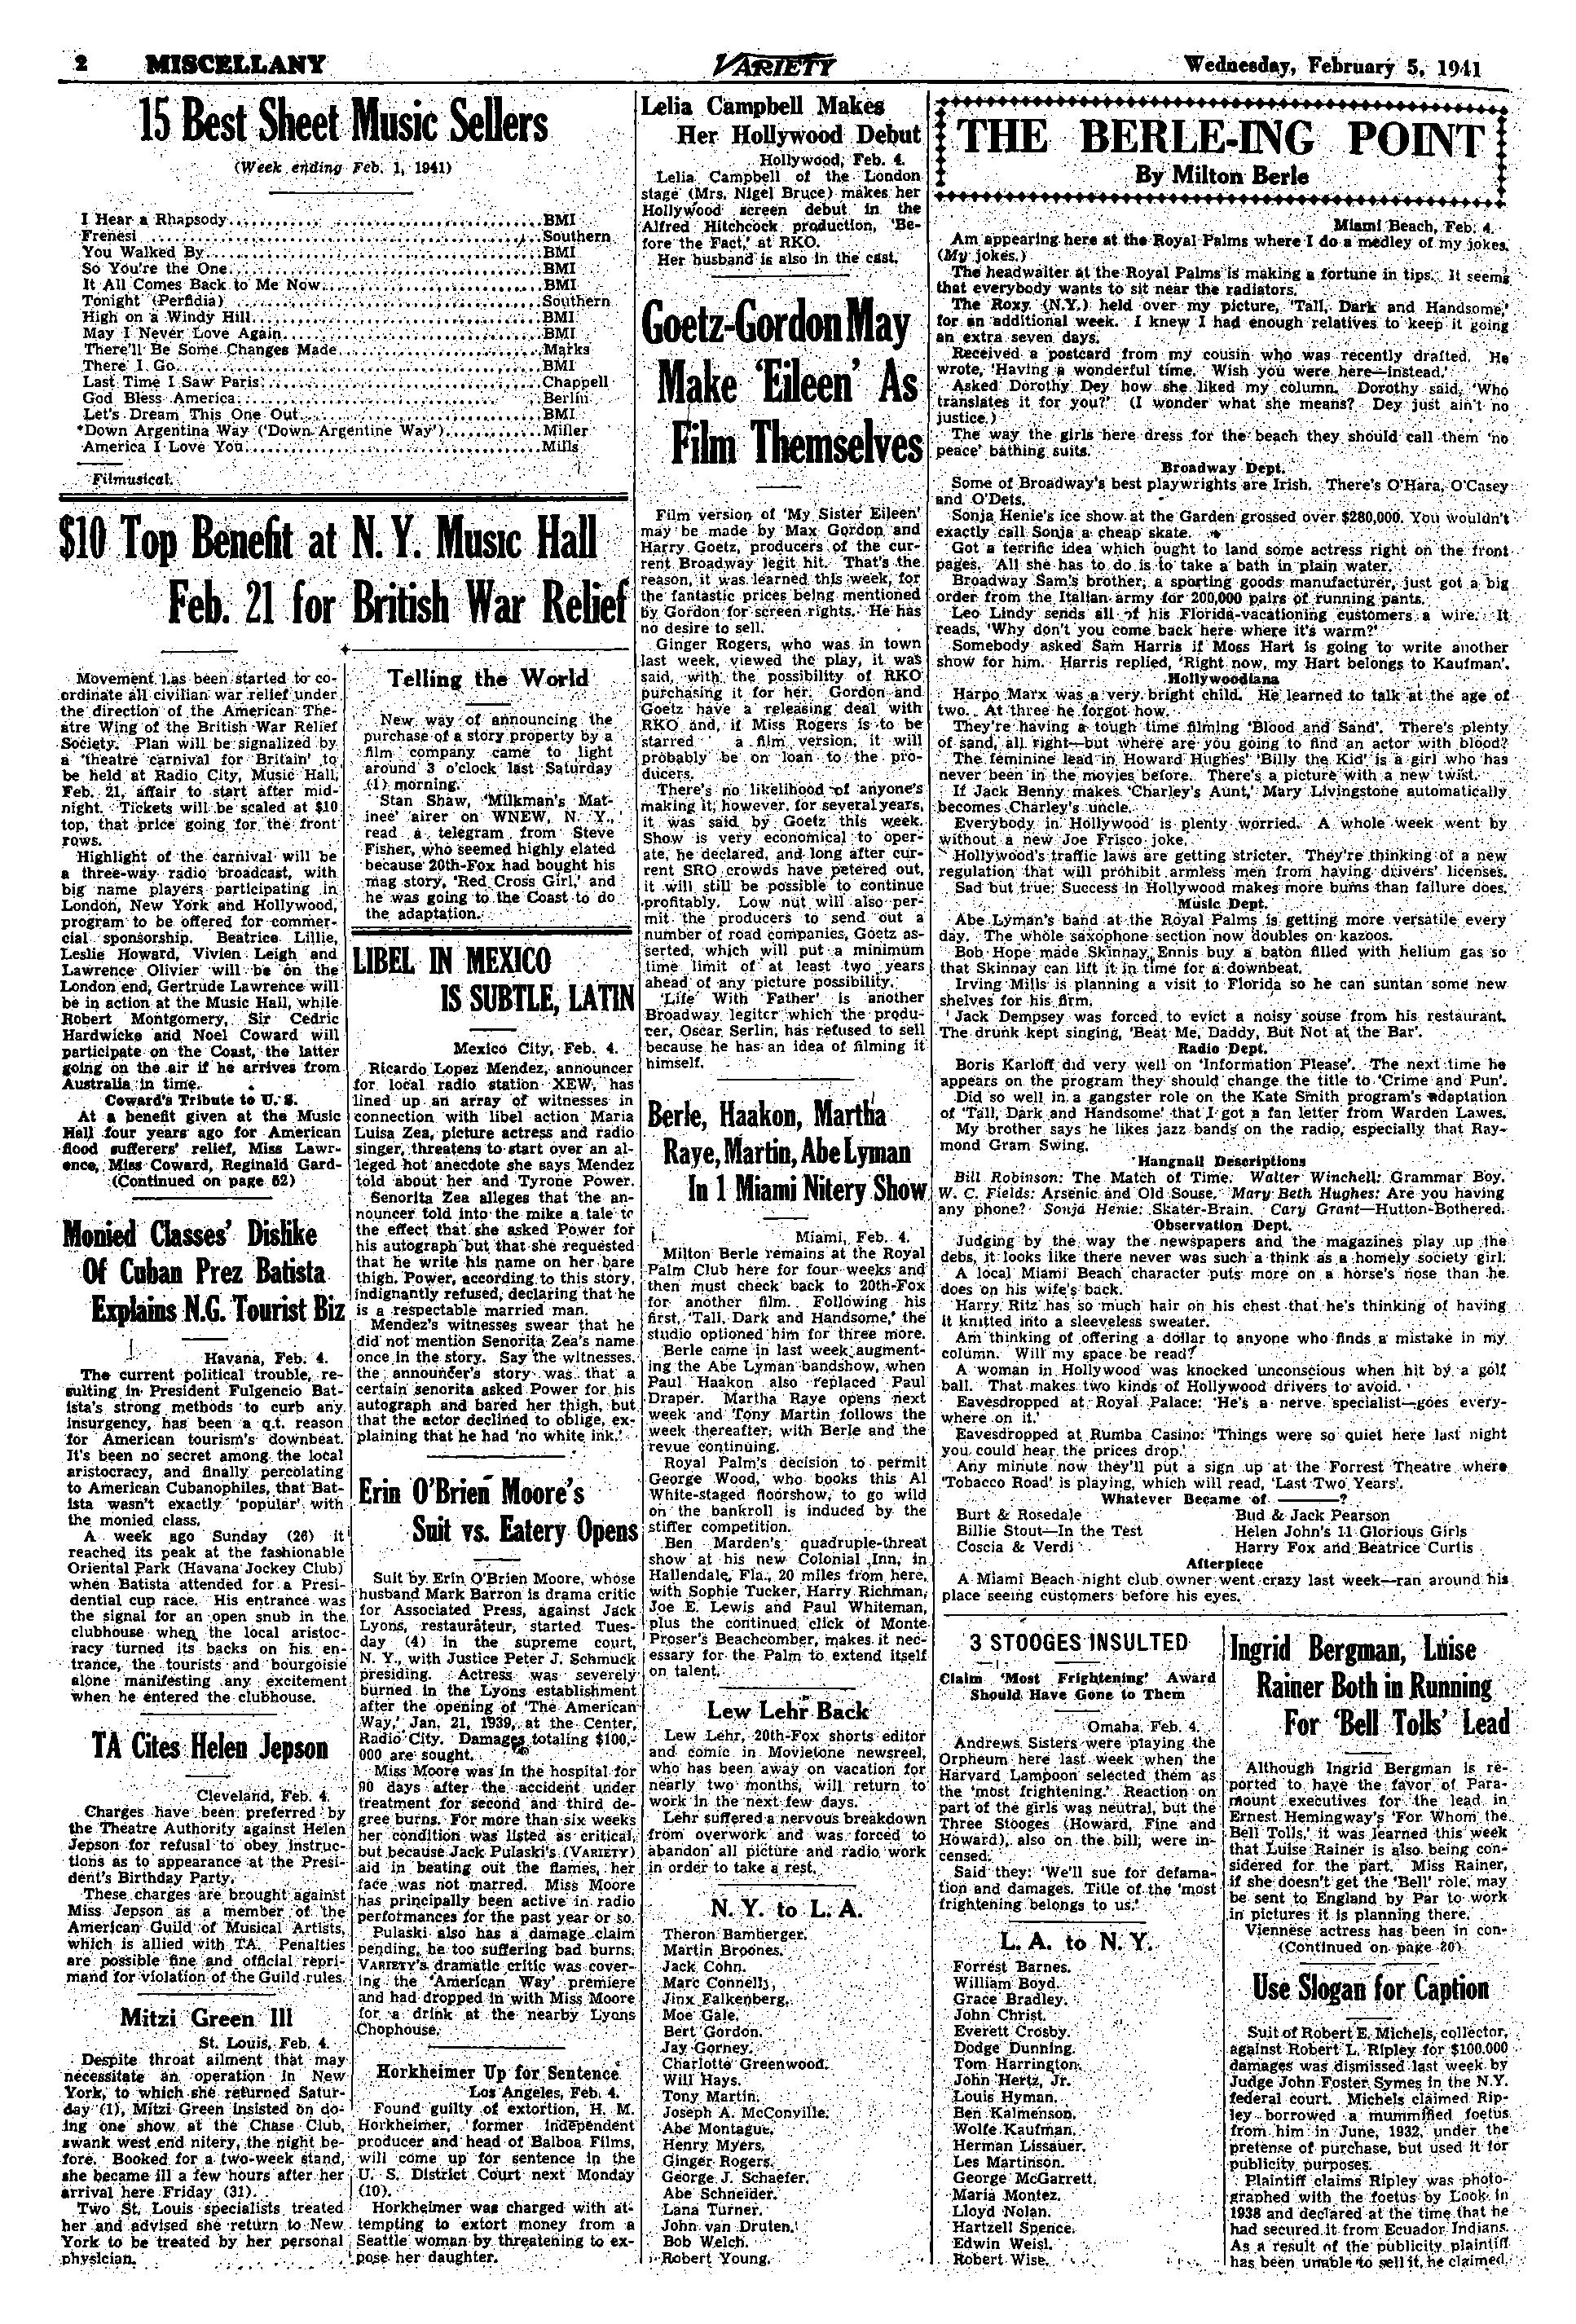 Variety (February 1941)